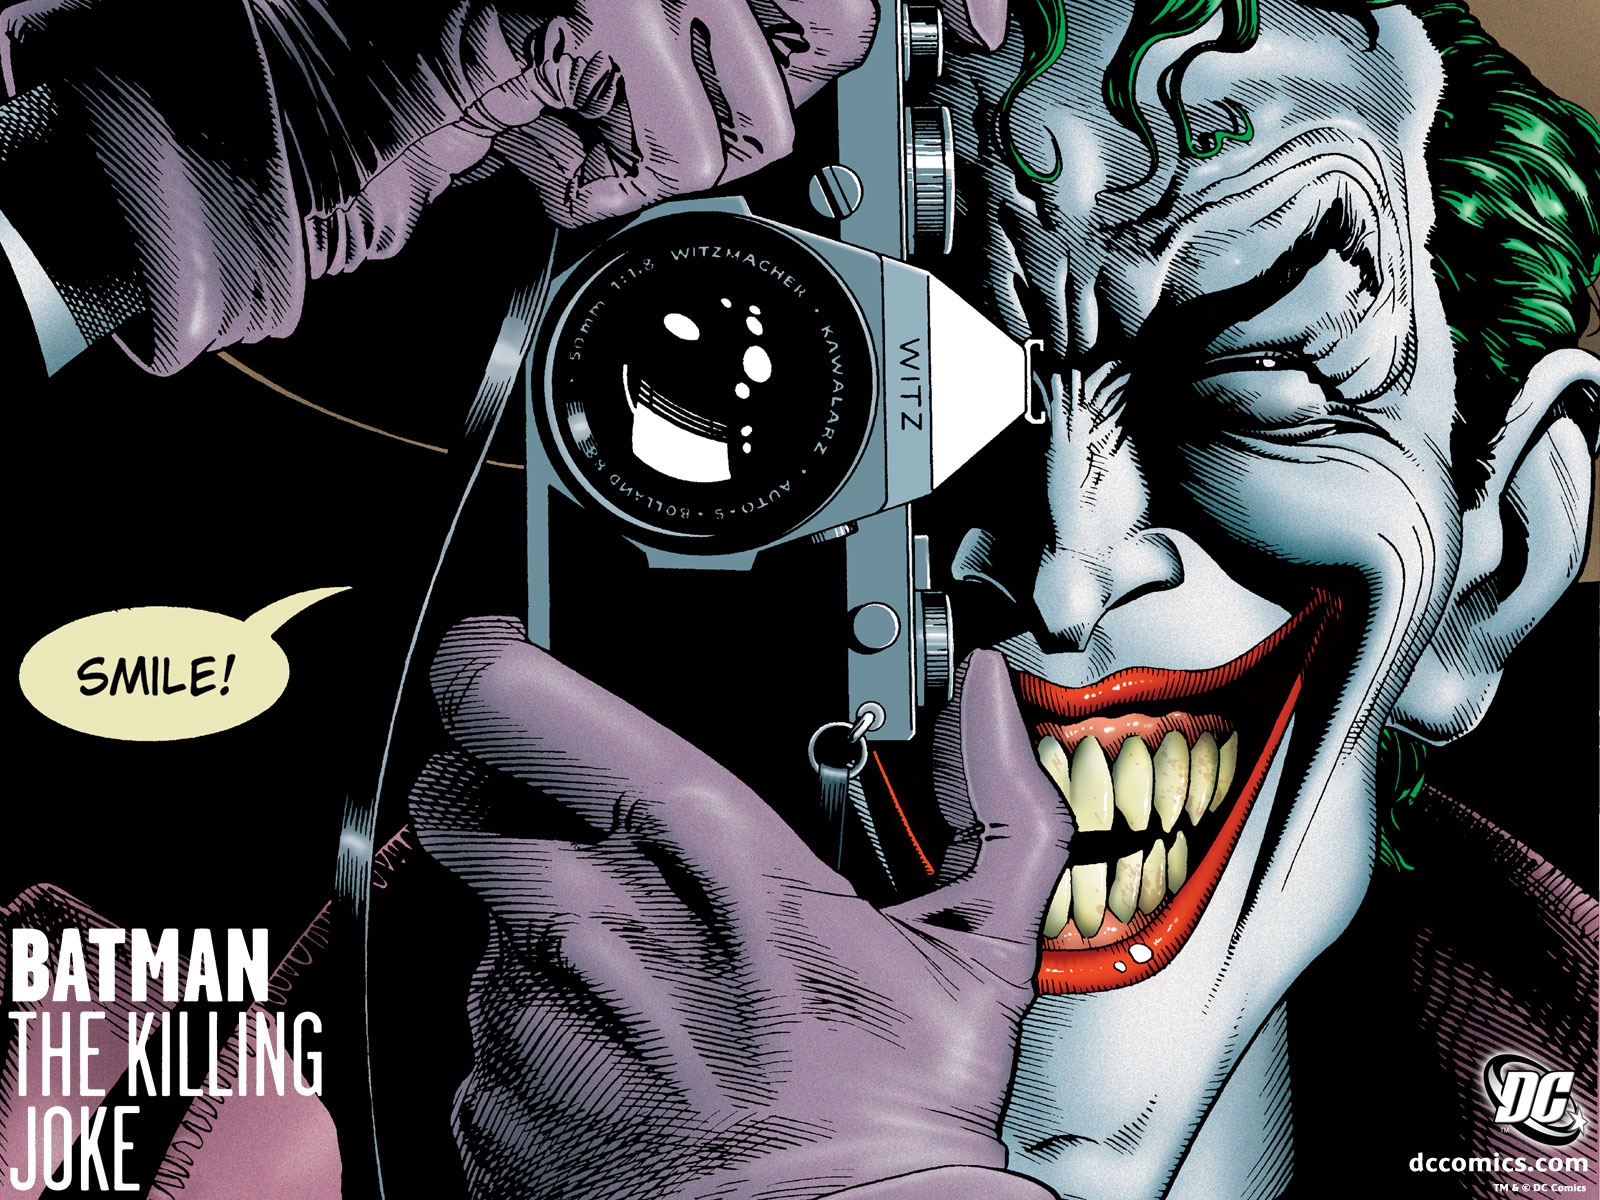 Sneak Peak for “Batman: The Killing Joke” animated film released